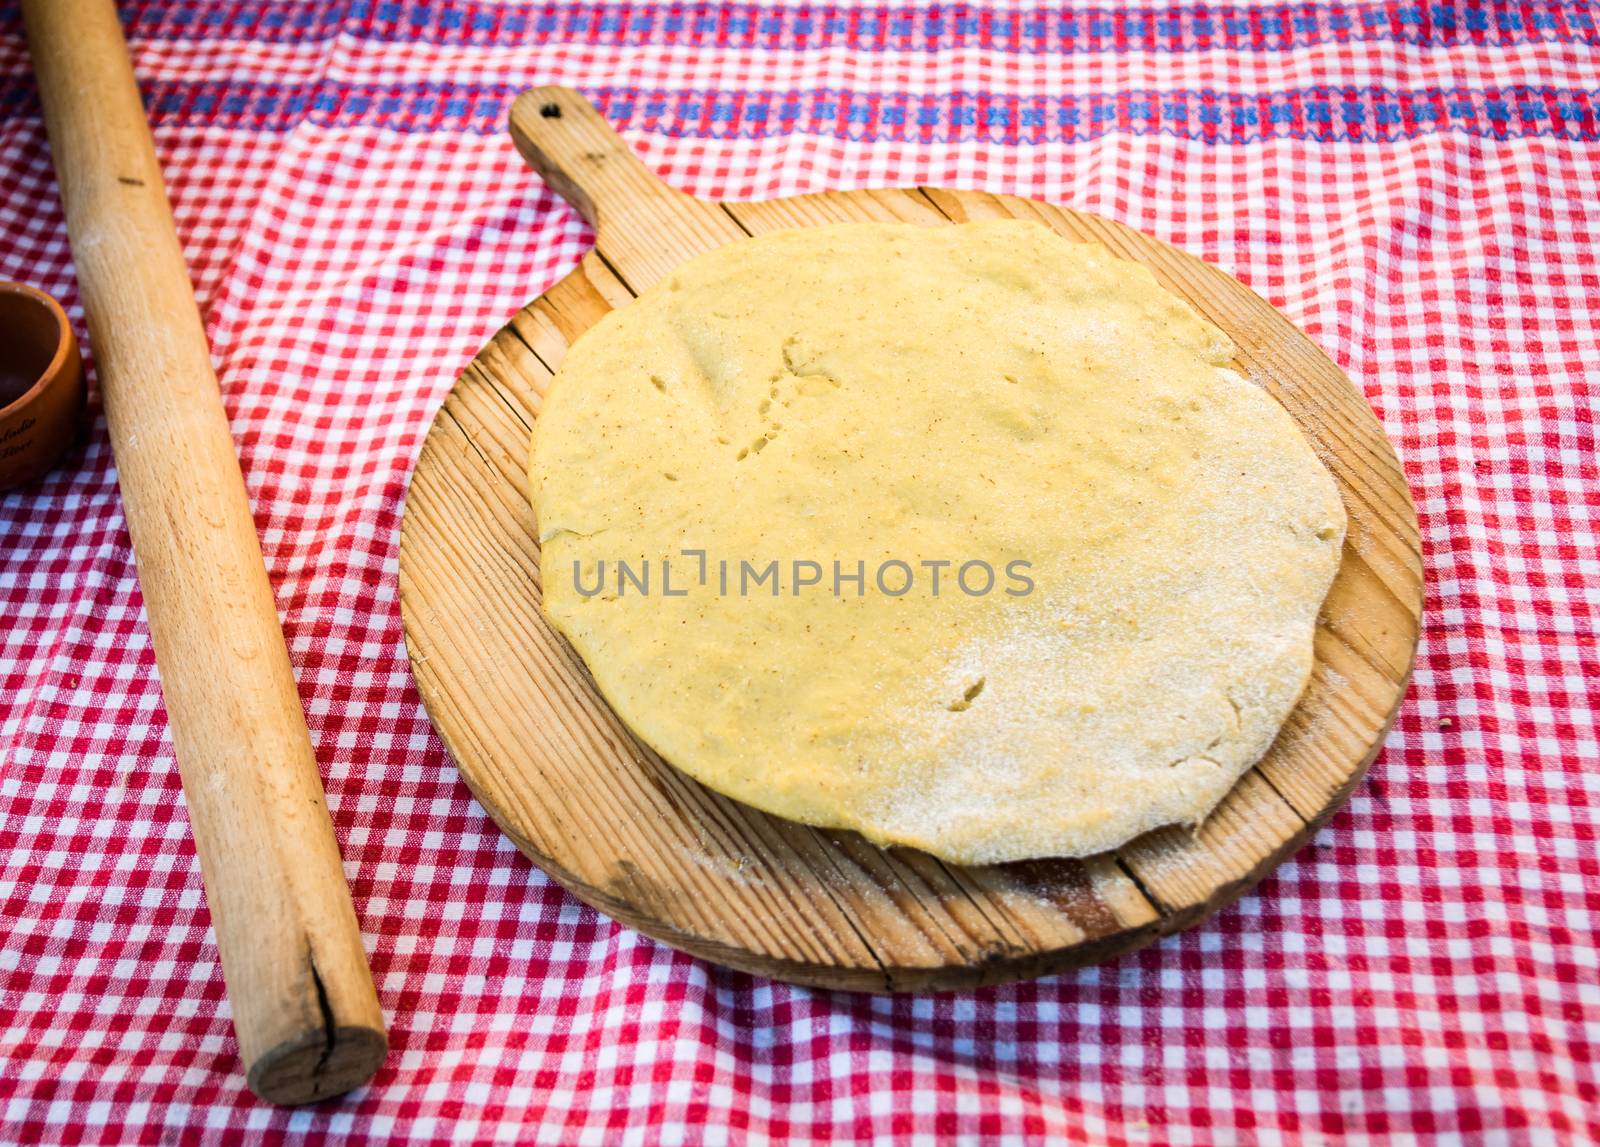 Polenta homemade on round wooden cutting board.